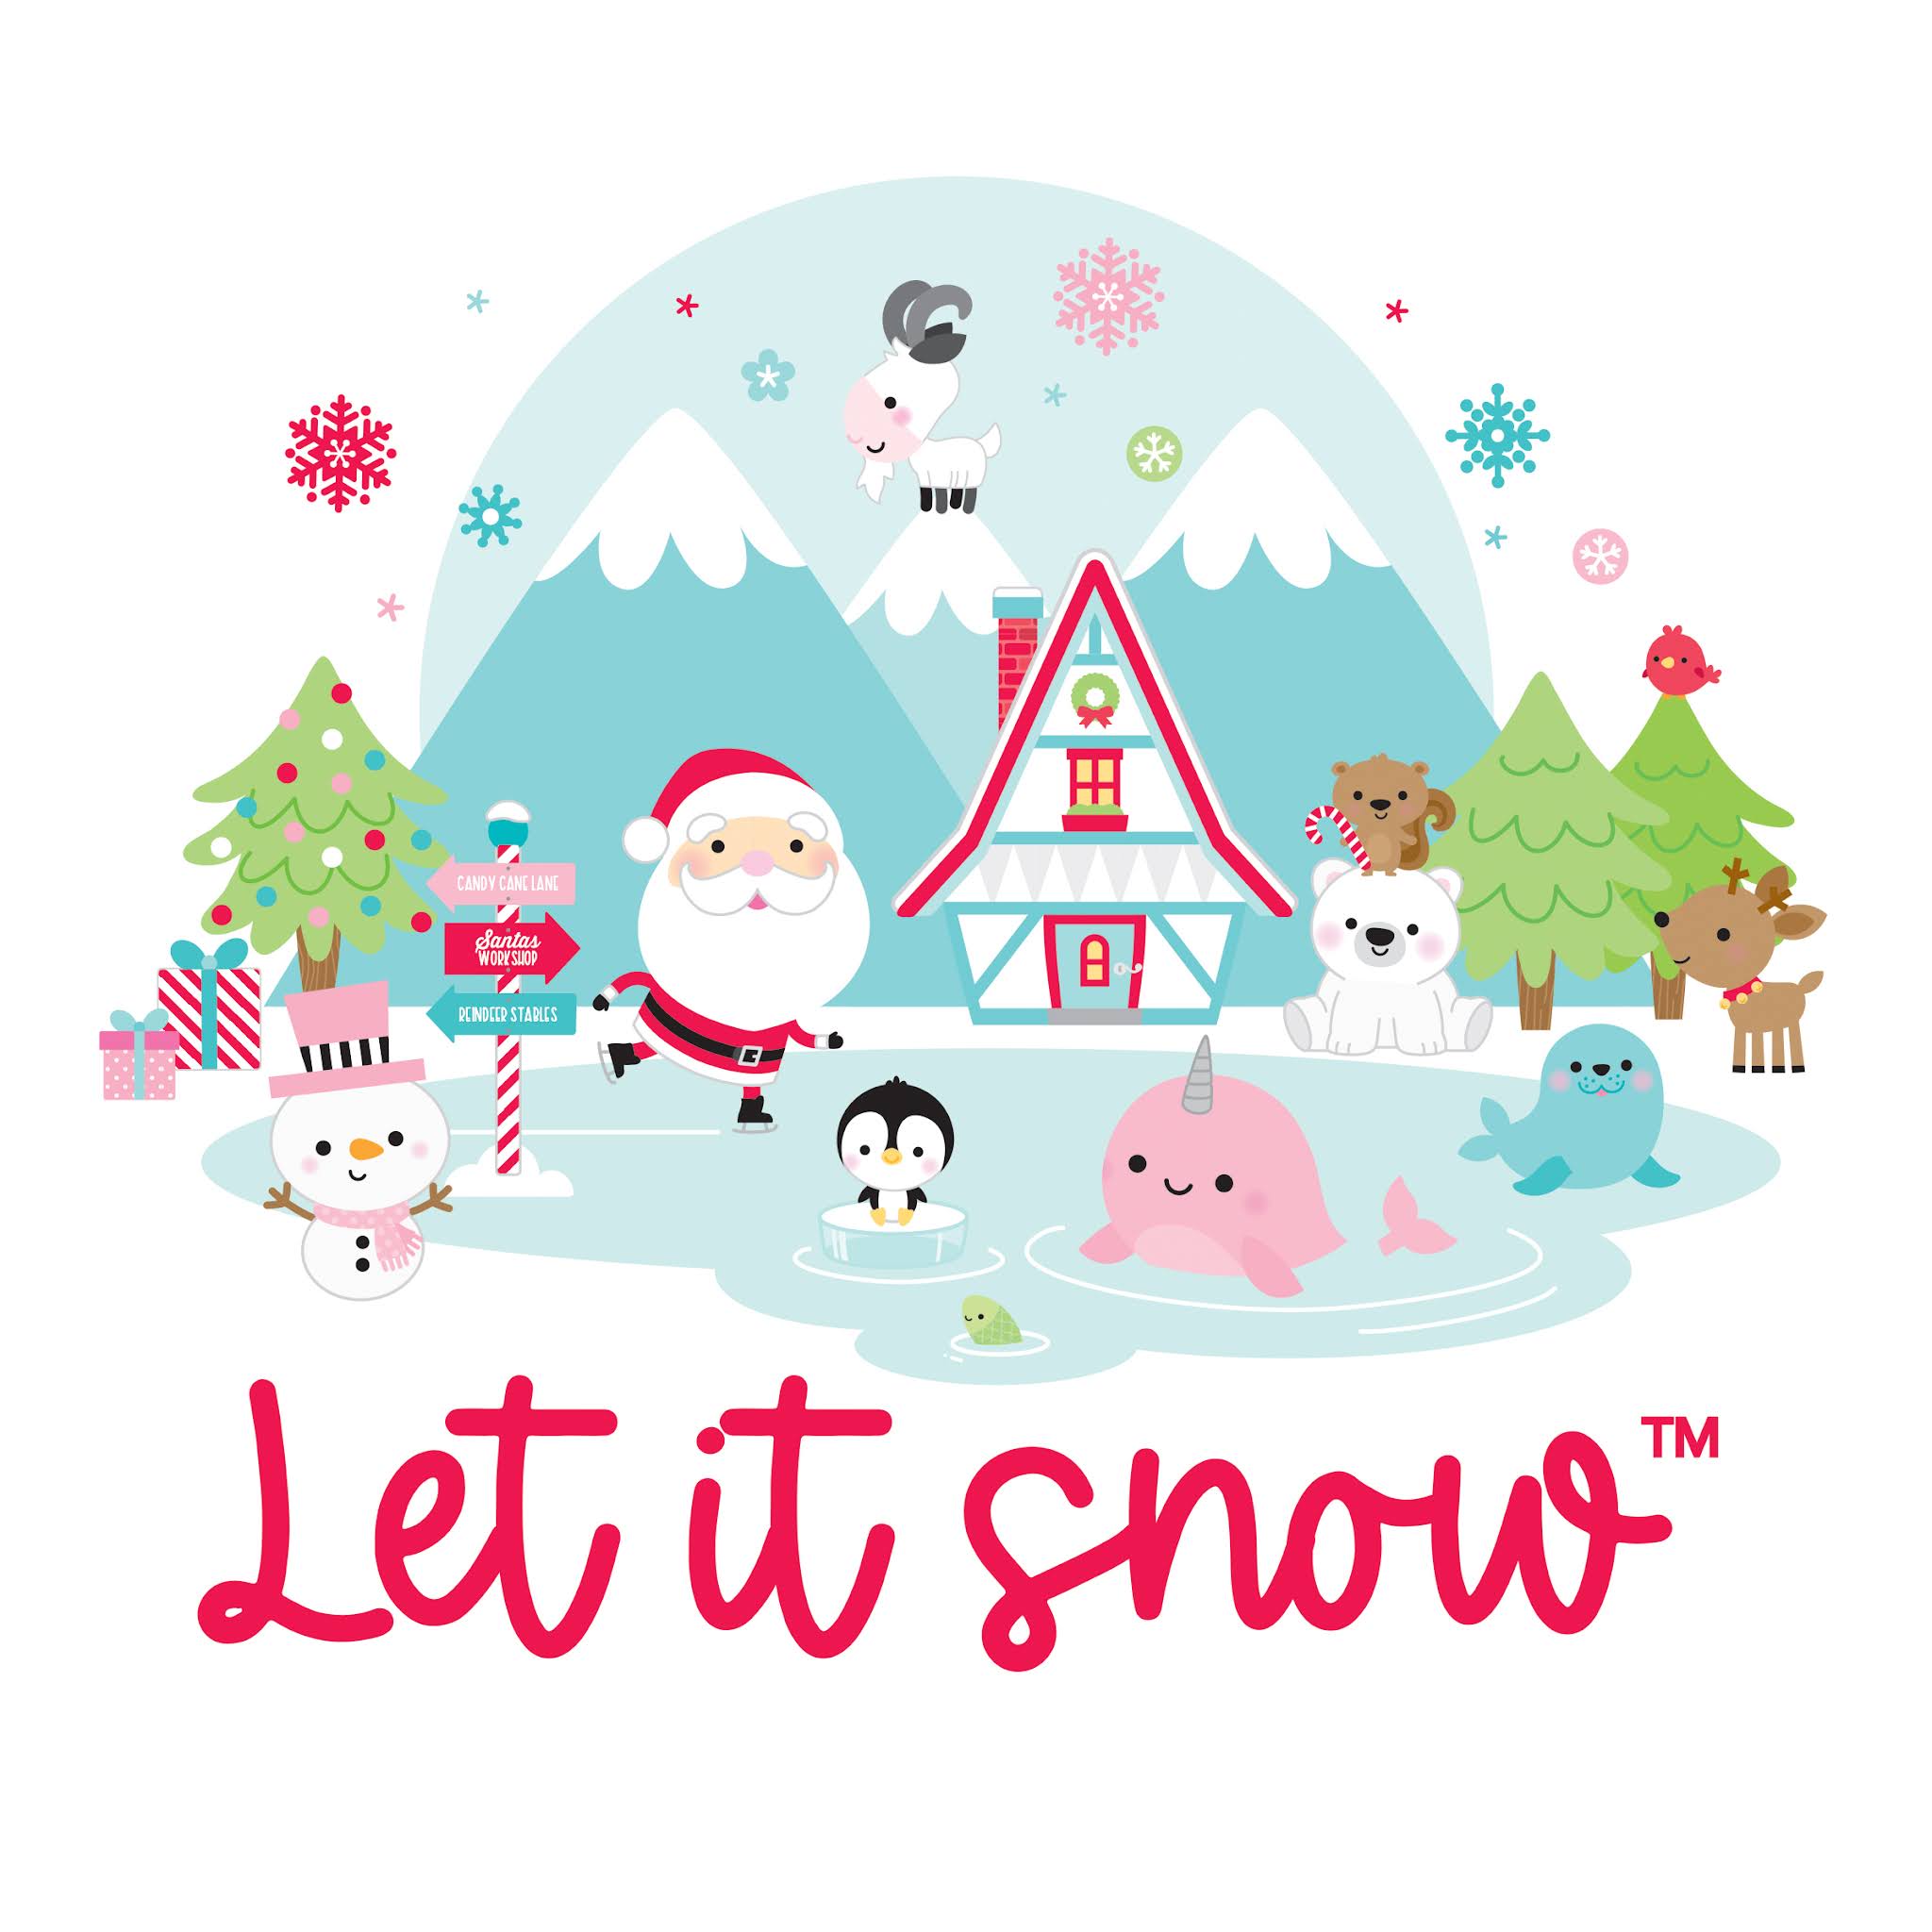 cartoon winter scene with "let it snow" in red script